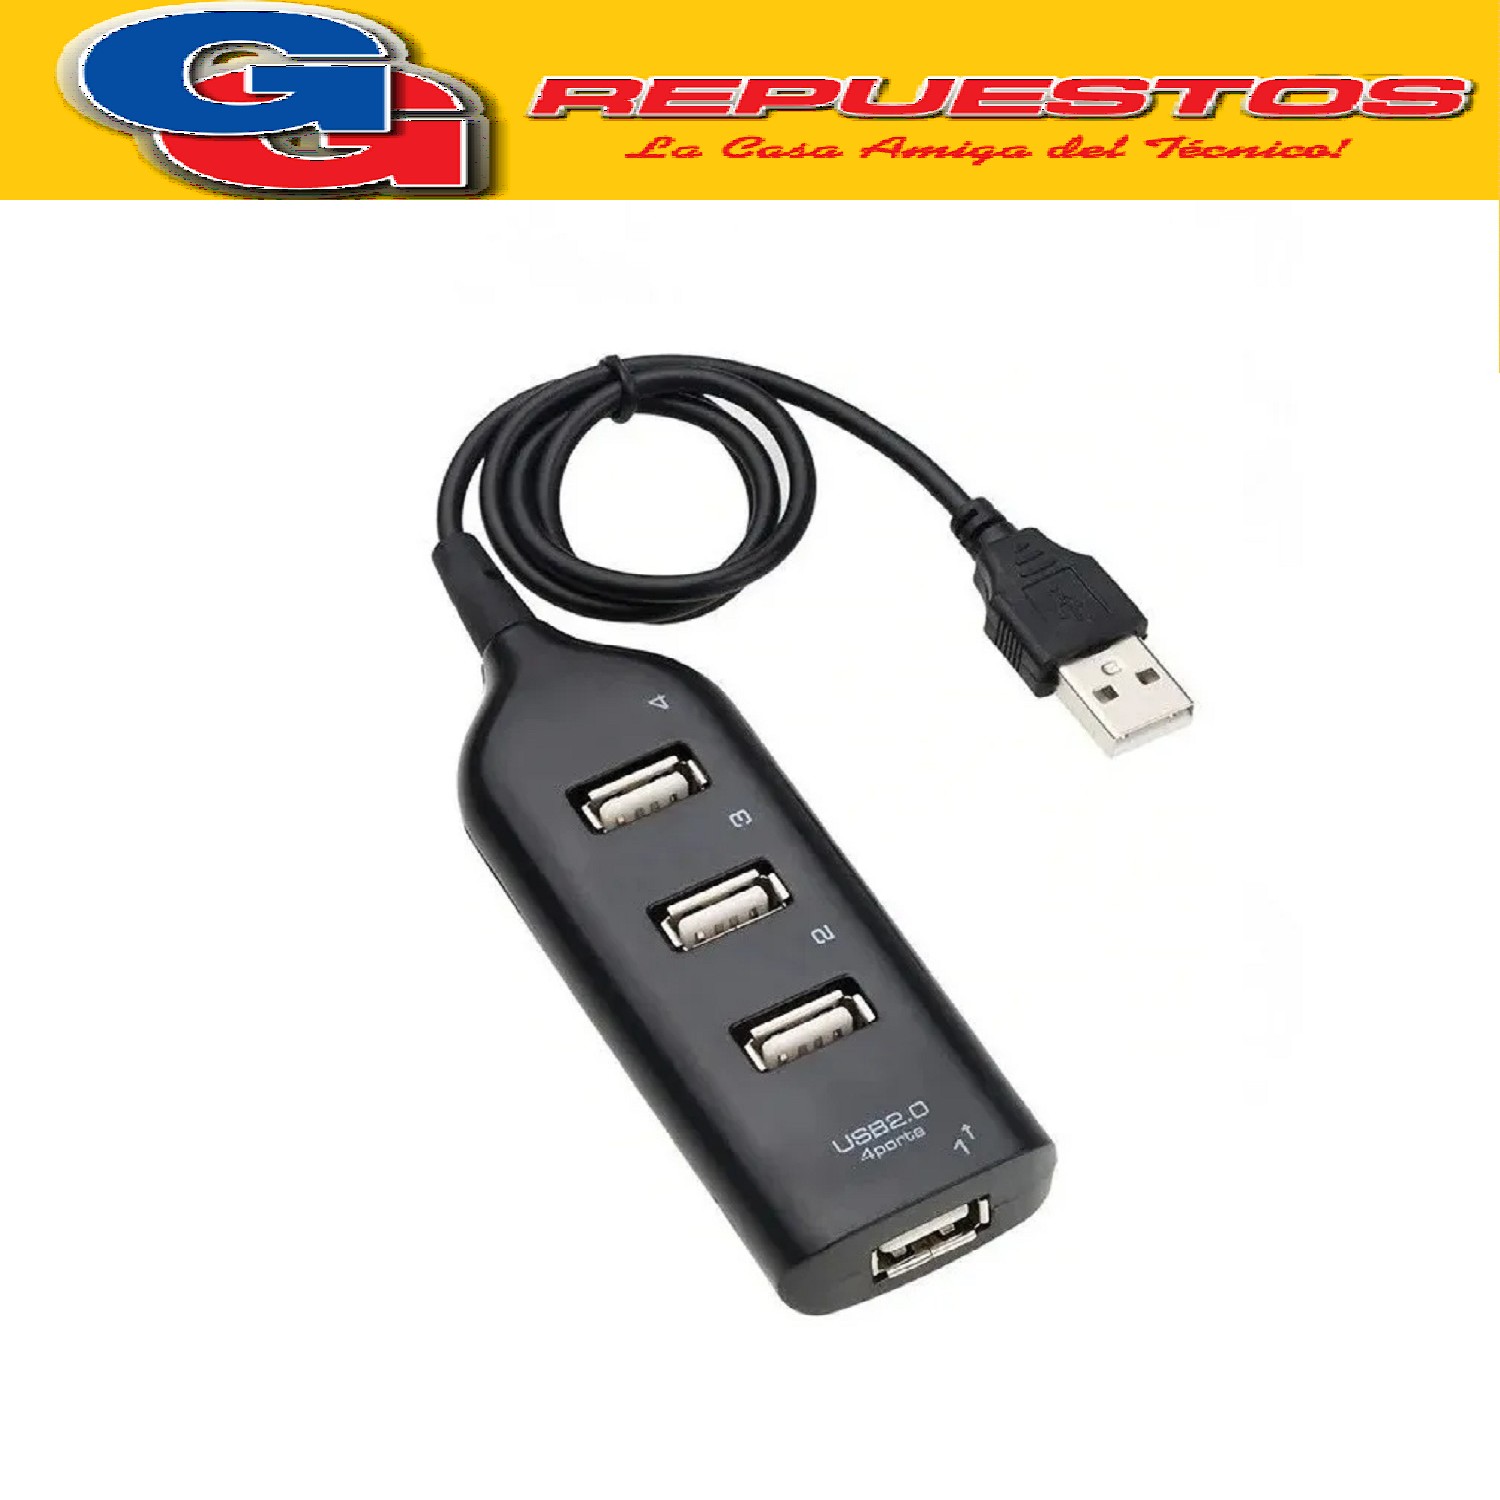 ZAPATILLA USB STB53 HUB USB 2.0 USB 4 PUERTOS 2.0 MULTIPLICA DOR ADAPTADOR